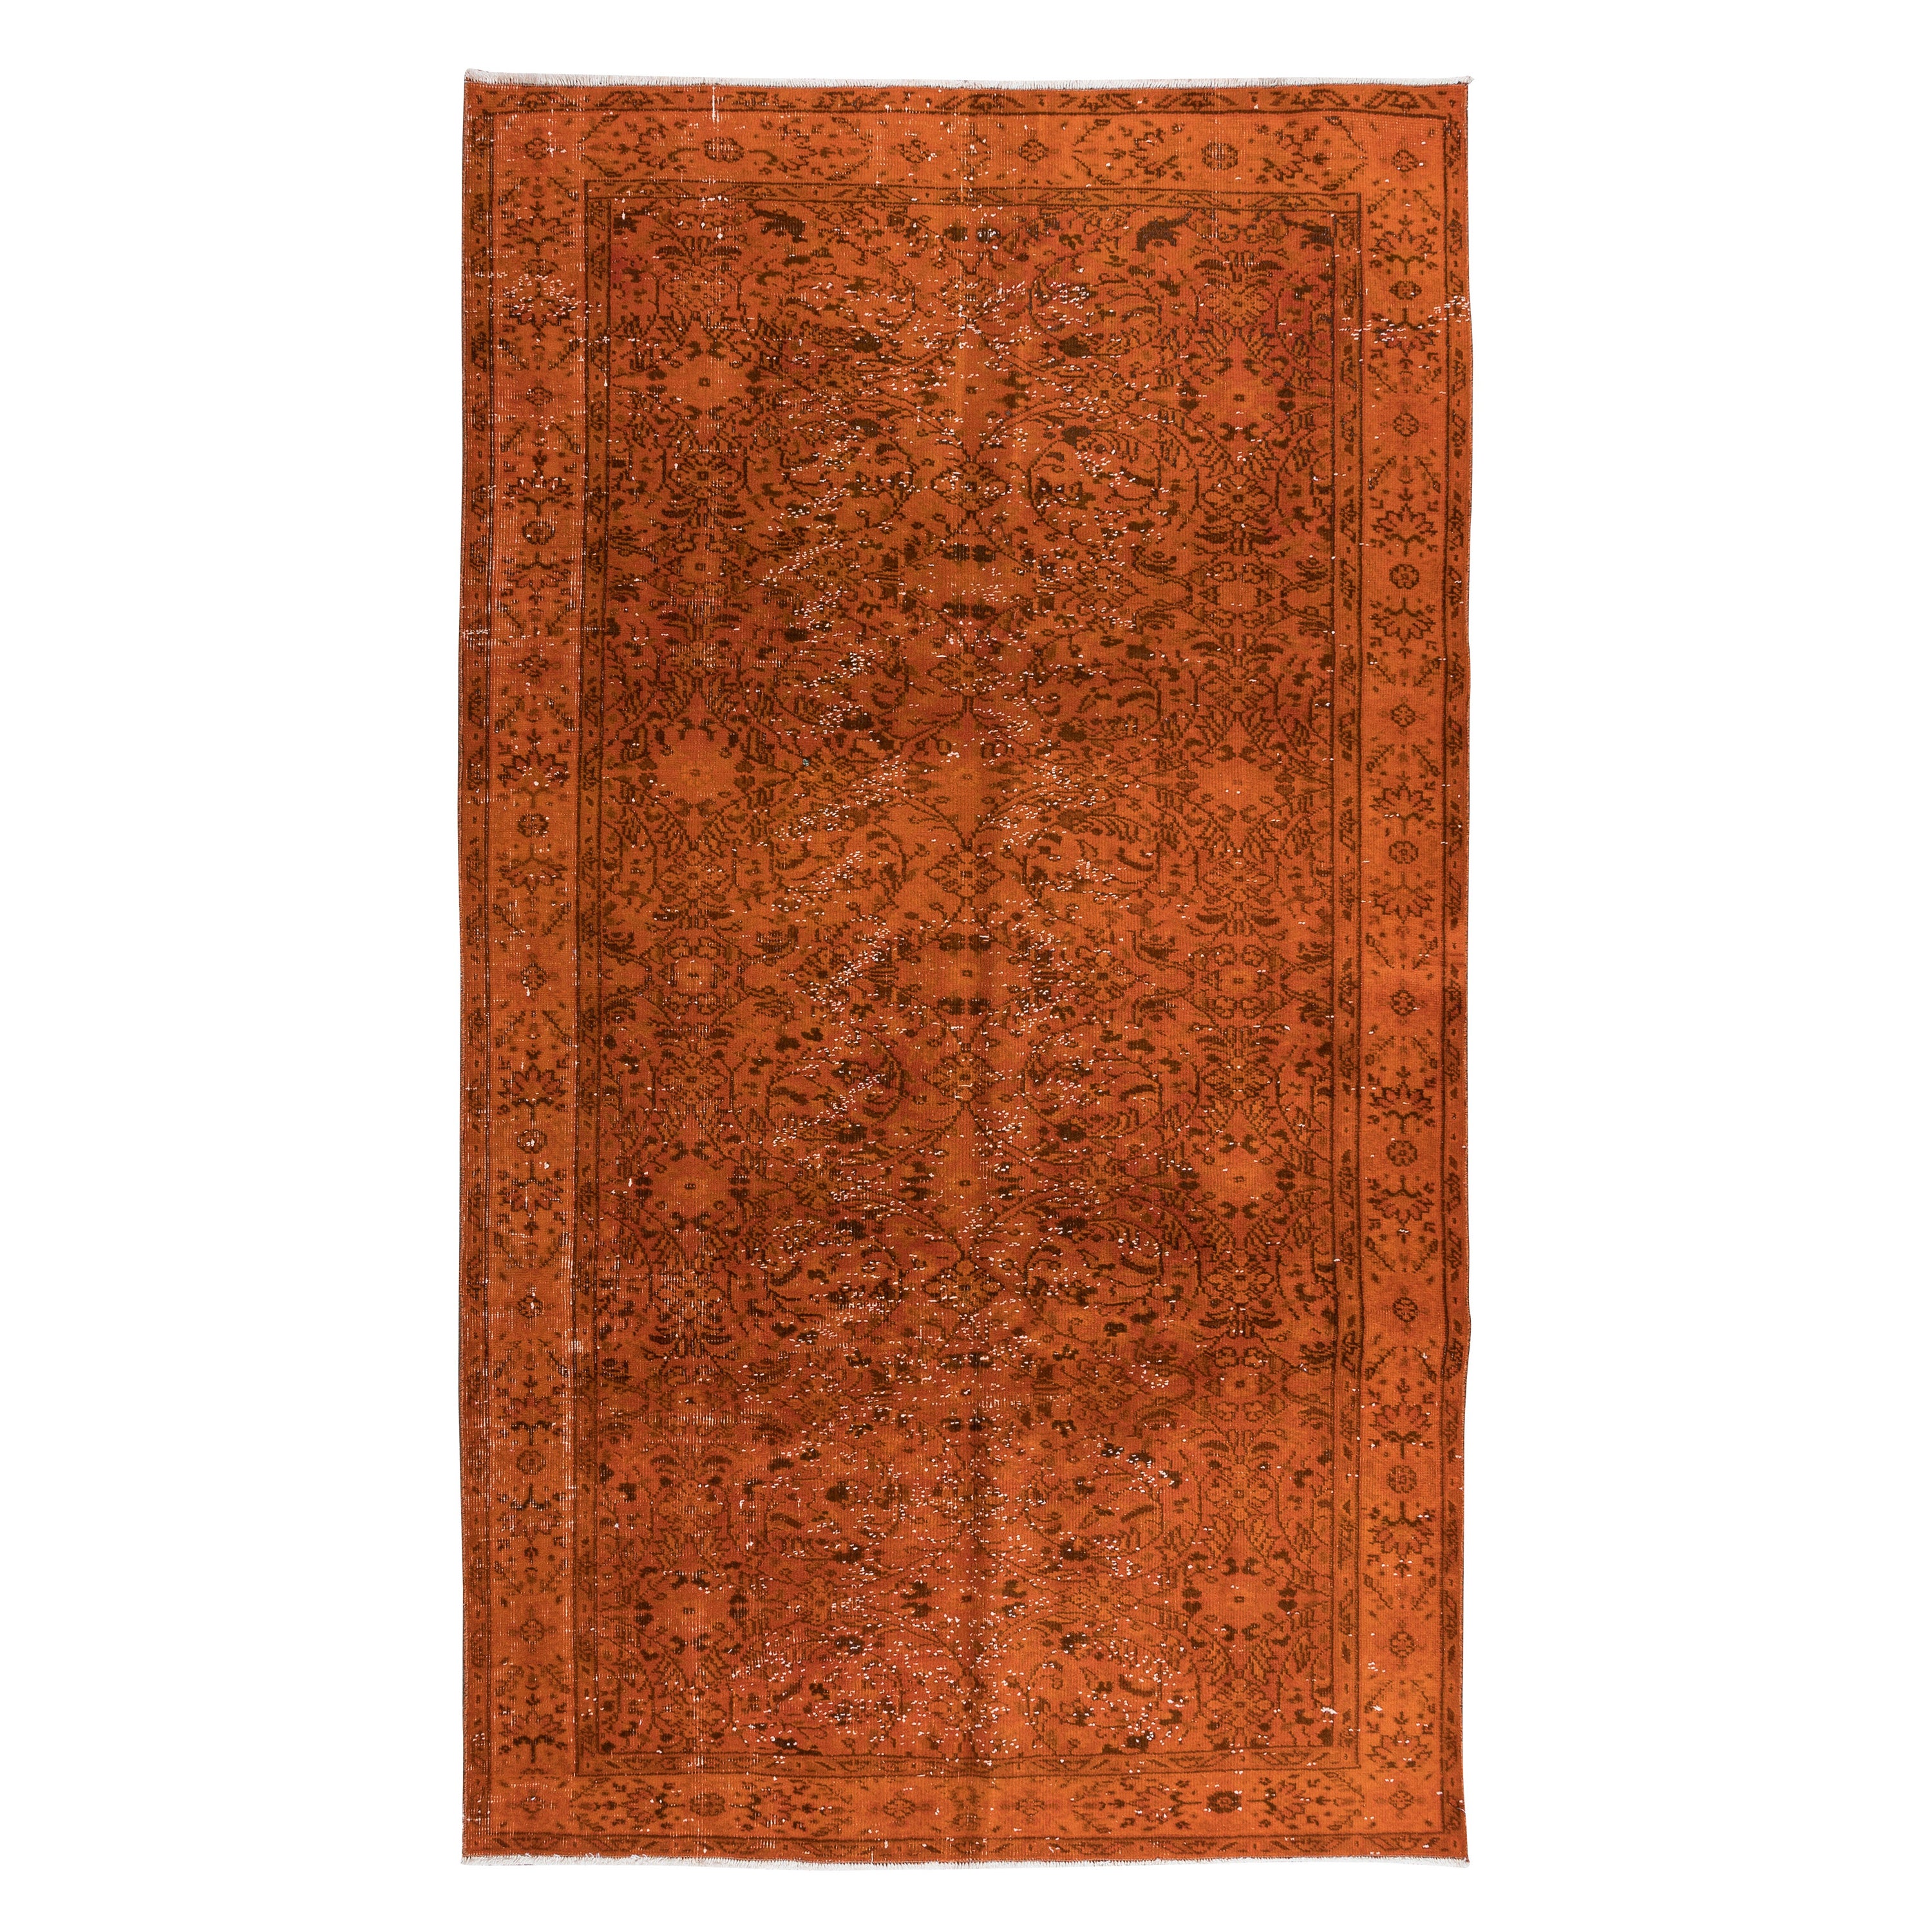 4.8x8.3 Ft Handmade Orange Area Rug from Turkey, Modern Anatolian Wool Carpet (tapis de laine anatolien moderne)